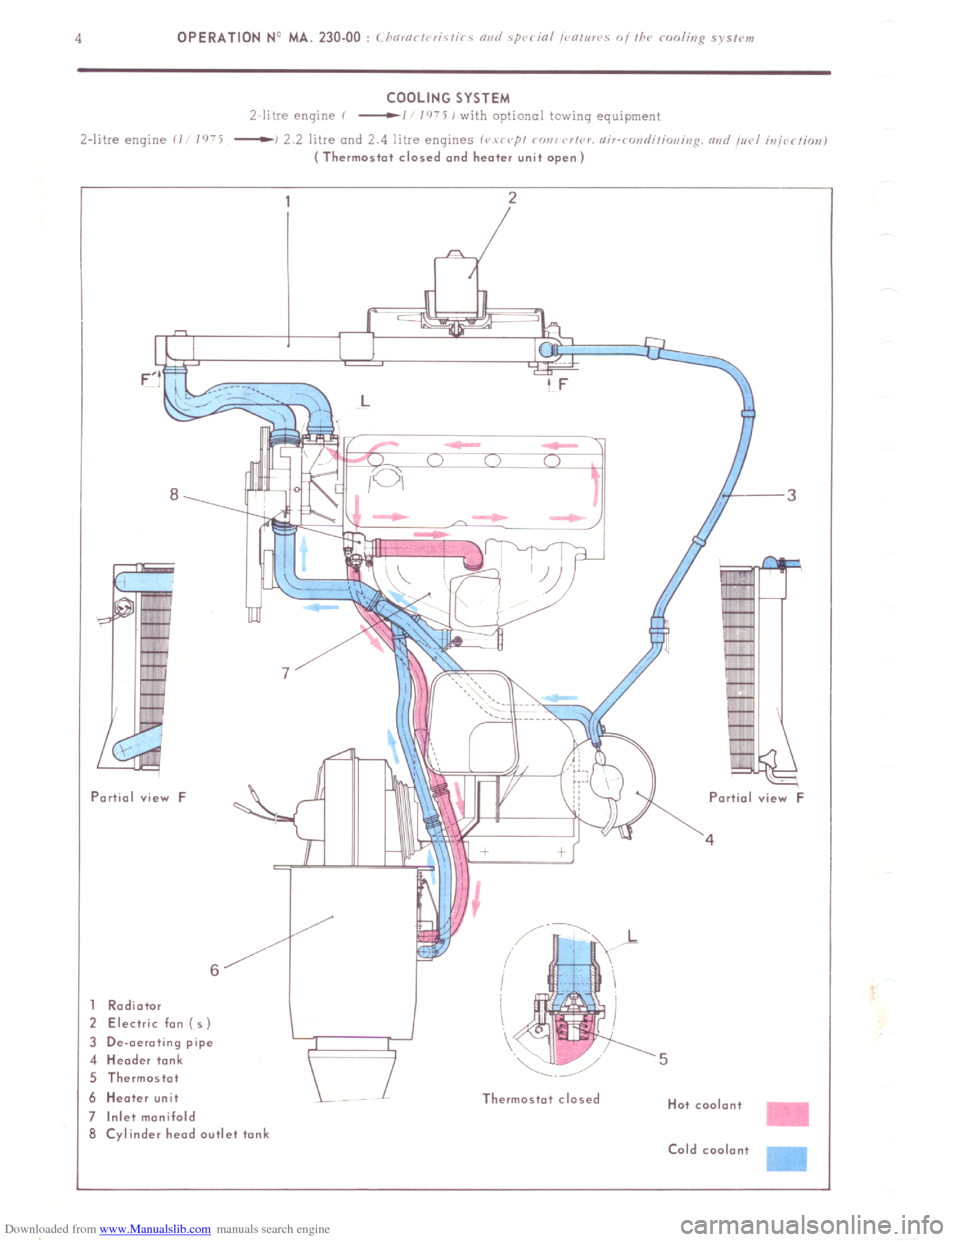 Citroen CX 1974 1.G Workshop Manual Downloaded from www.Manualslib.com manuals search engine - 
- 
‘F 
L 
Radiator 
! Electric fan ( 5) 
I De-oeroting pipe 
I Header tank 
i Thermostot 
I Heater unit 
Inlet manifold 
i Cylinder head o